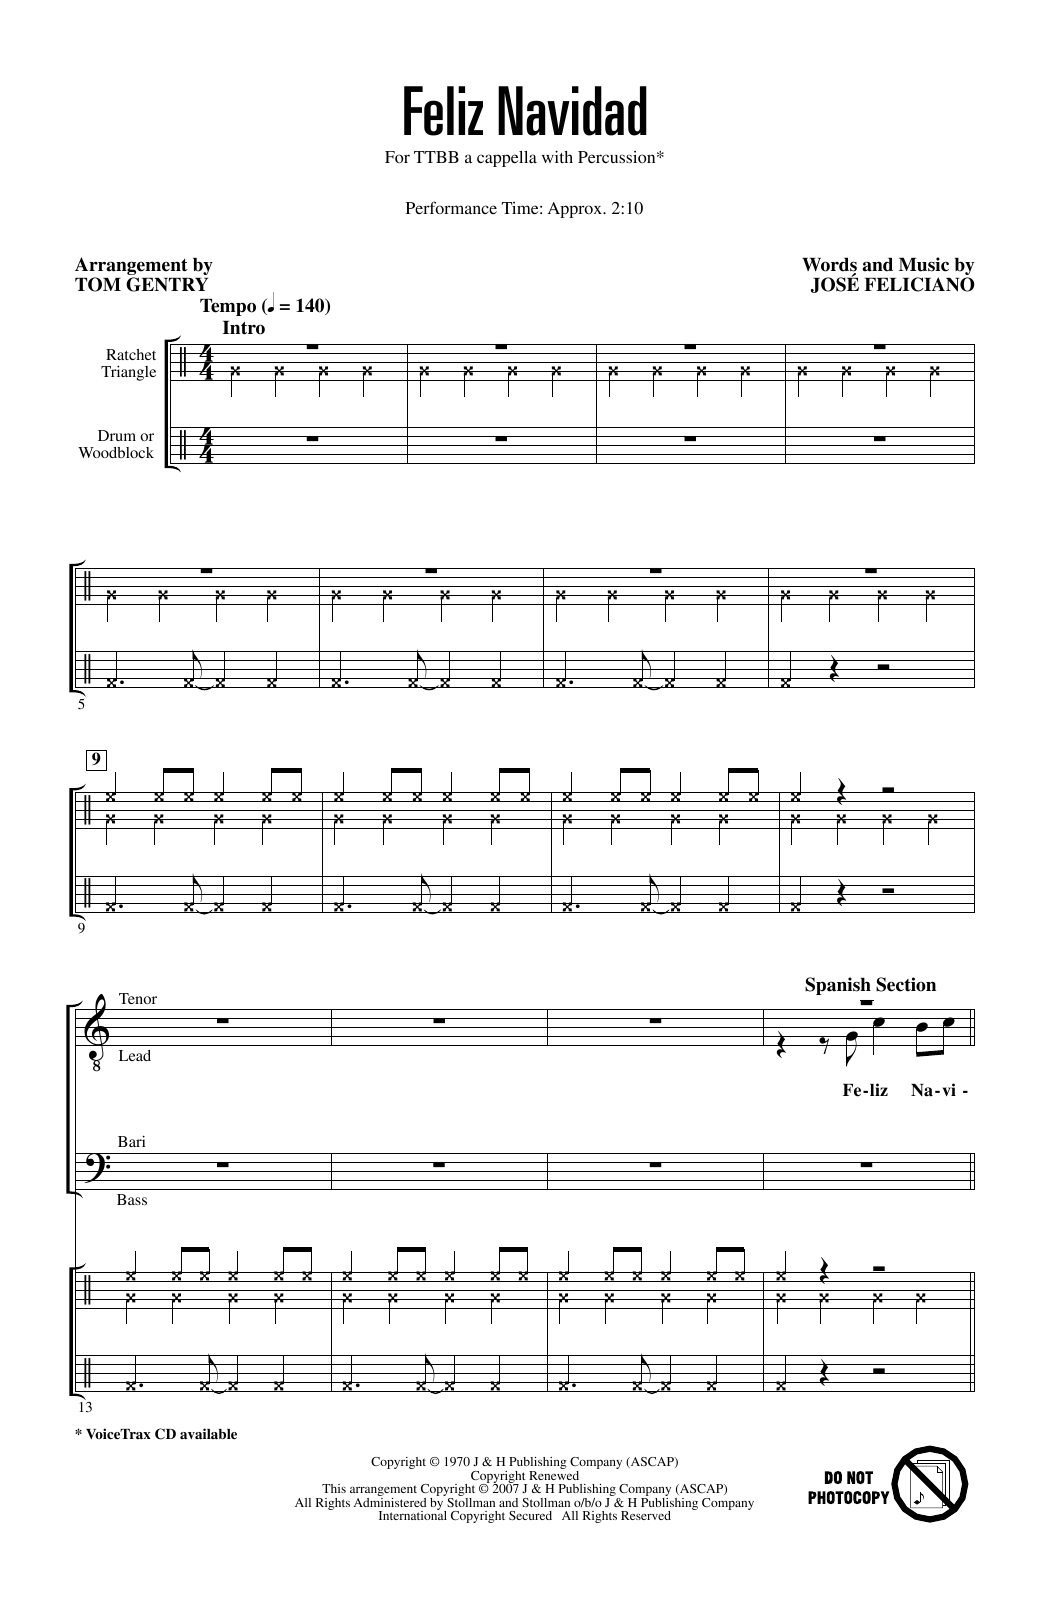 Jose Feliciano Feliz Navidad (arr. Tom Gentry, David Briner) Sheet Music Notes & Chords for TTBB Choir - Download or Print PDF